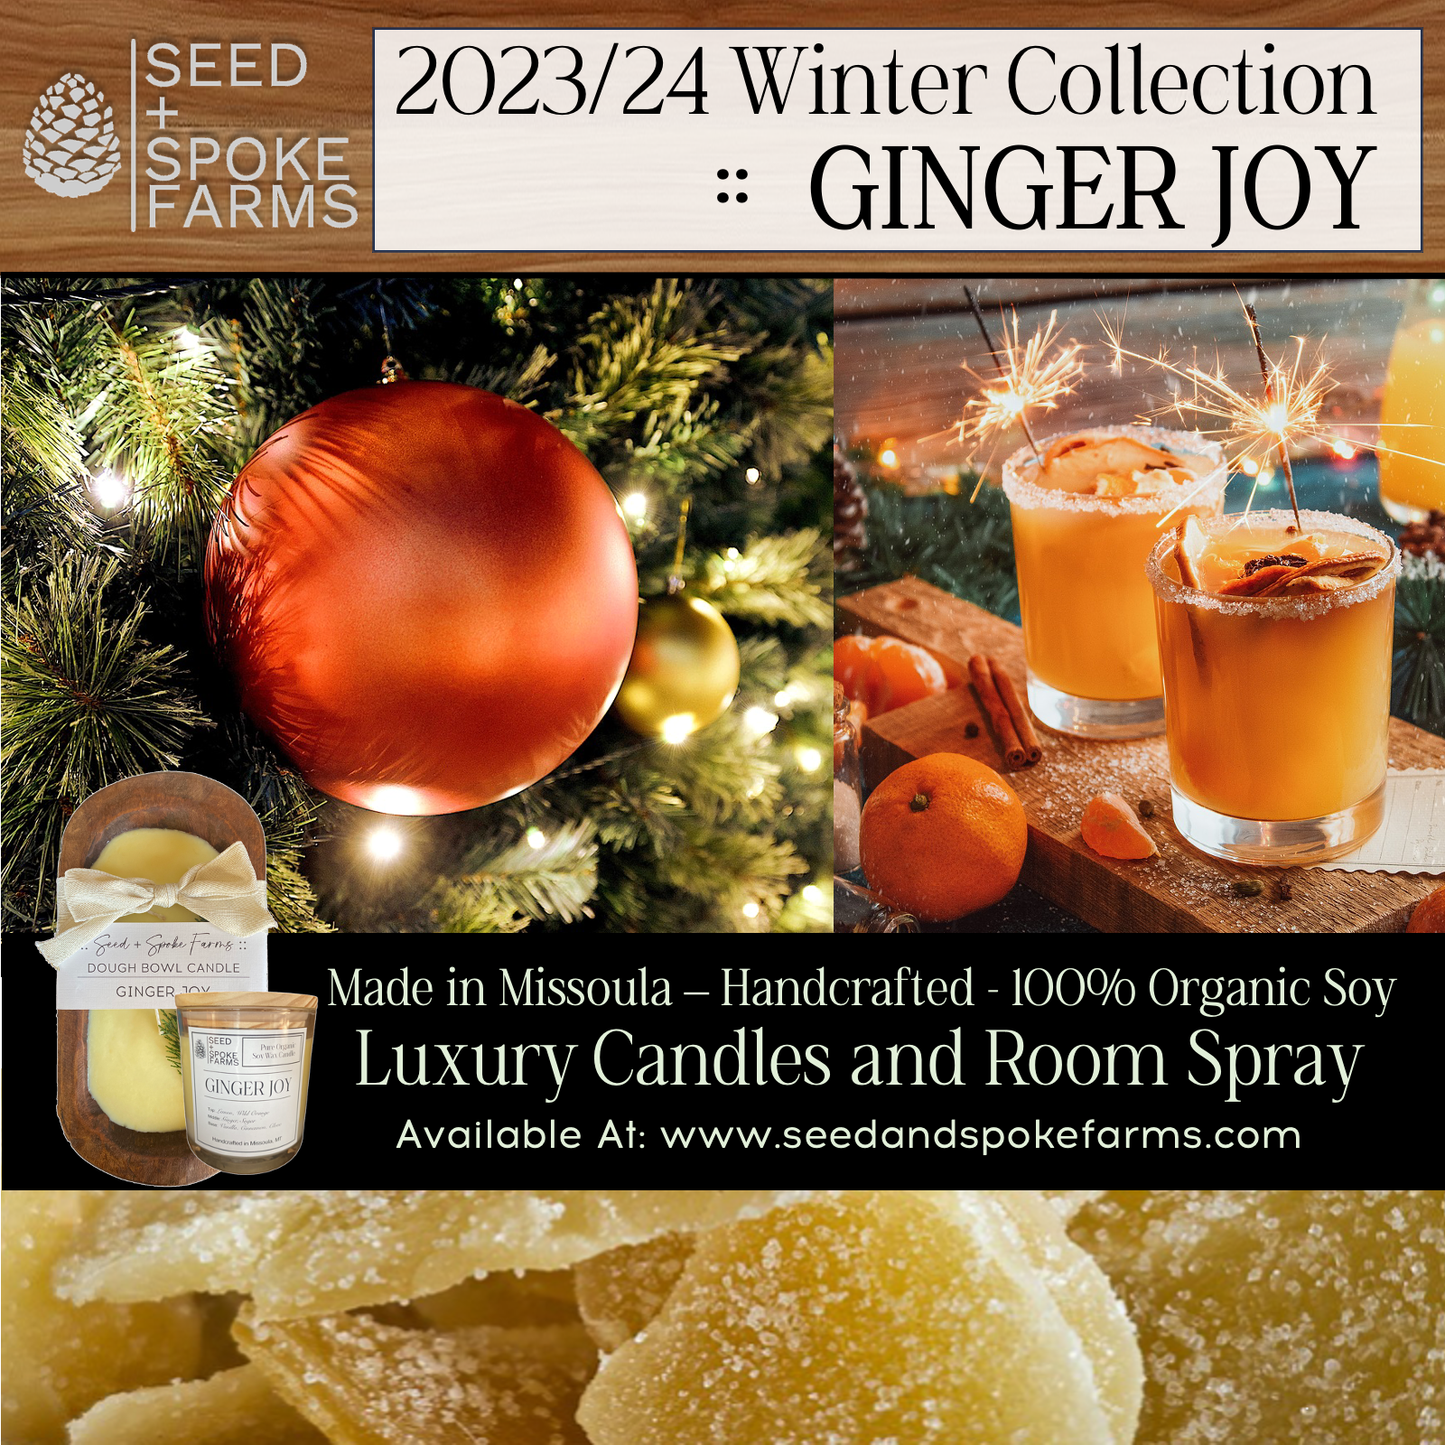 Ginger Joy - Rustic Wood Dough Bowl Candle